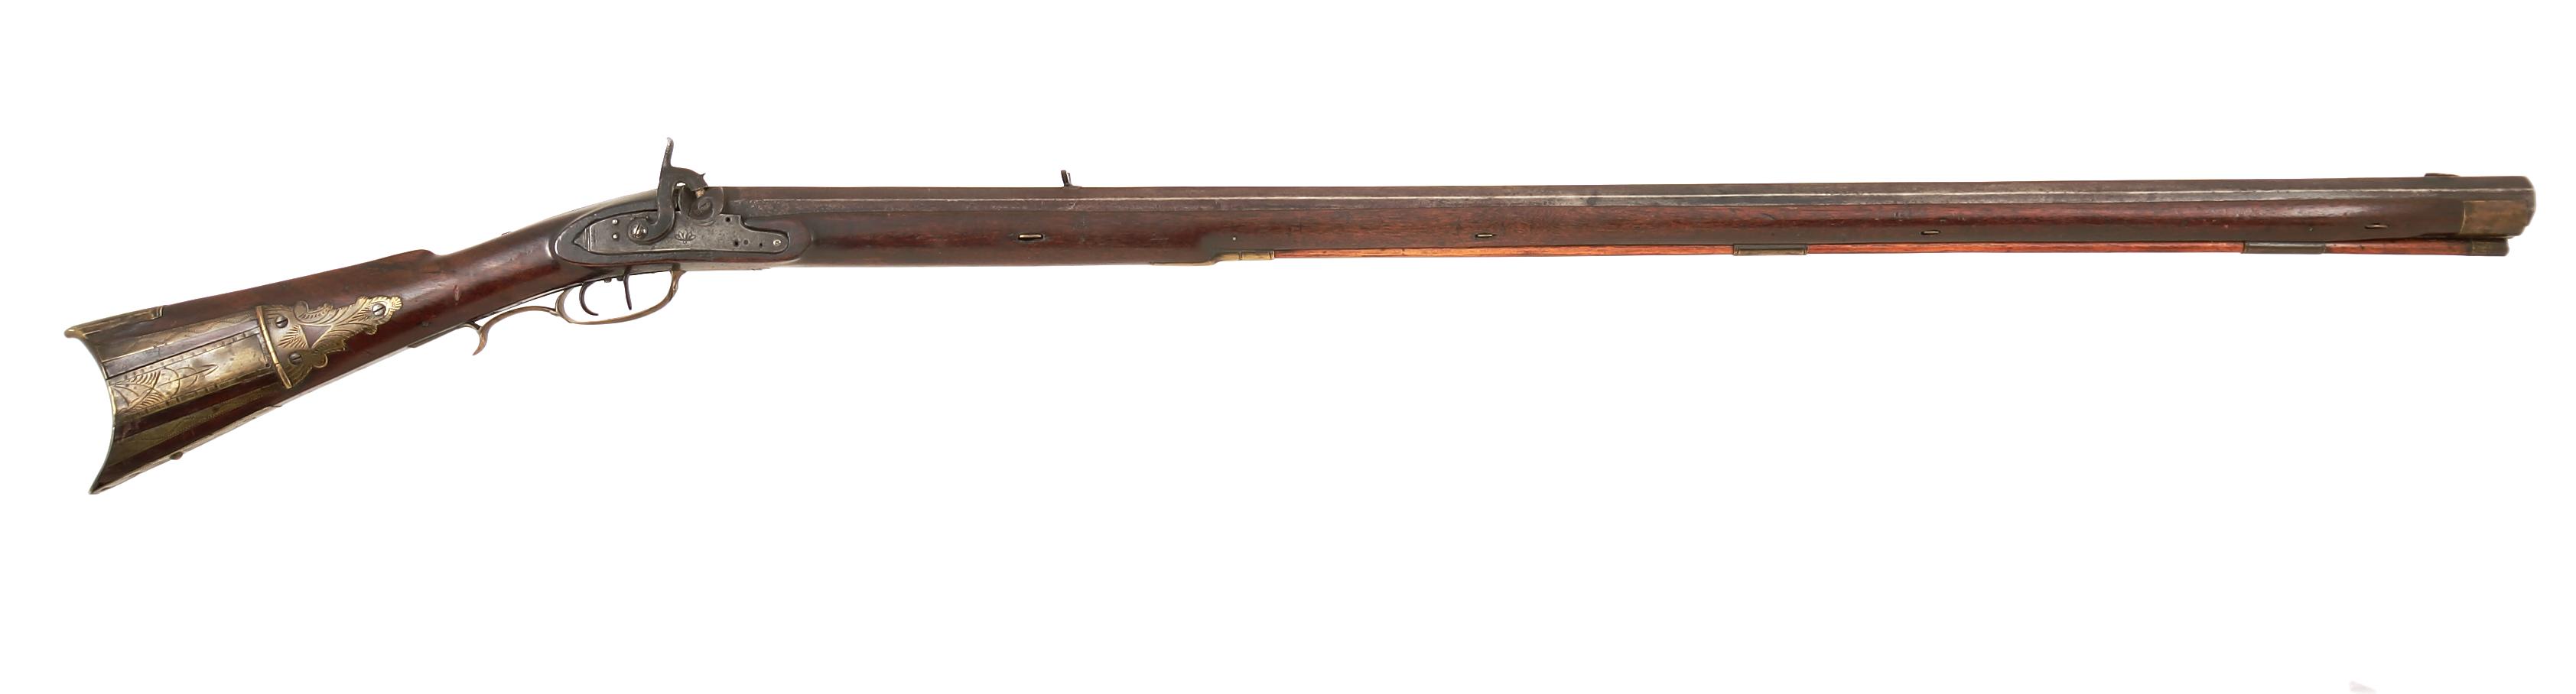 Hawken Rifle Cody 1